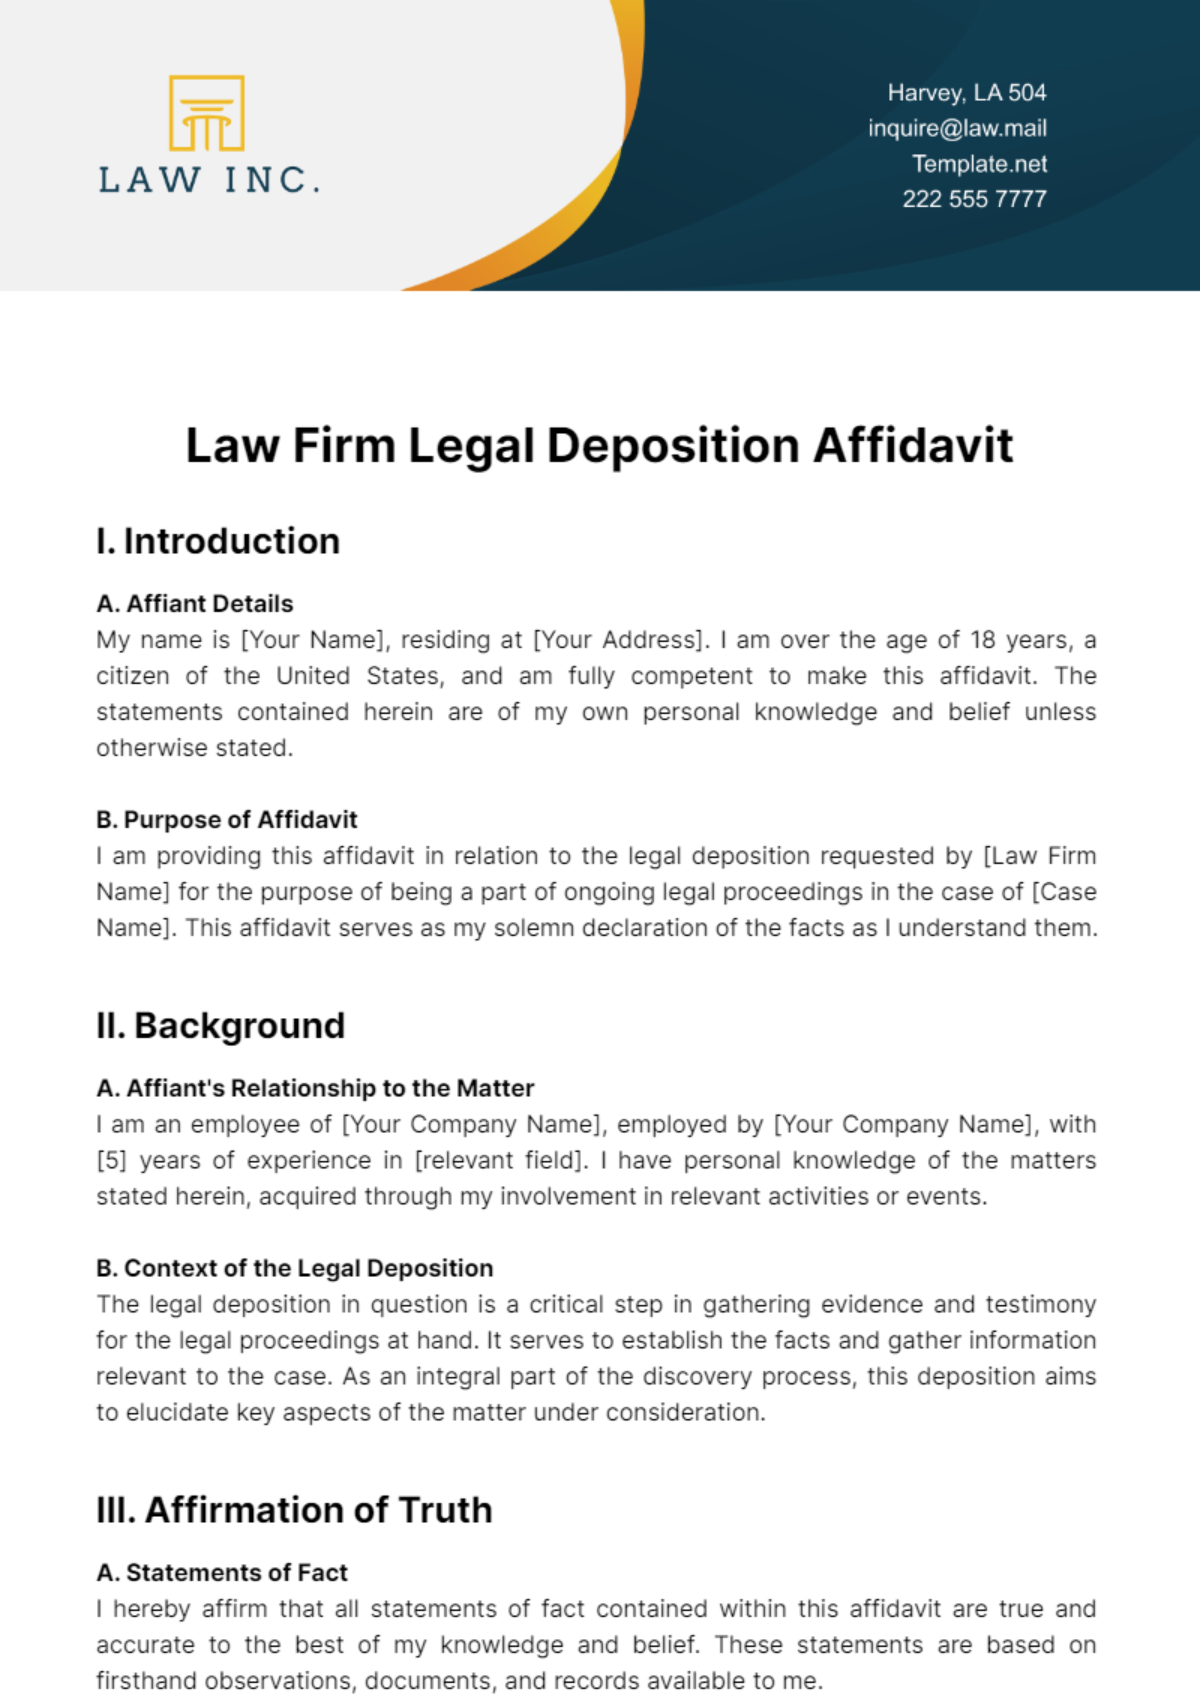 Free Law Firm Legal Deposition Affidavit Template